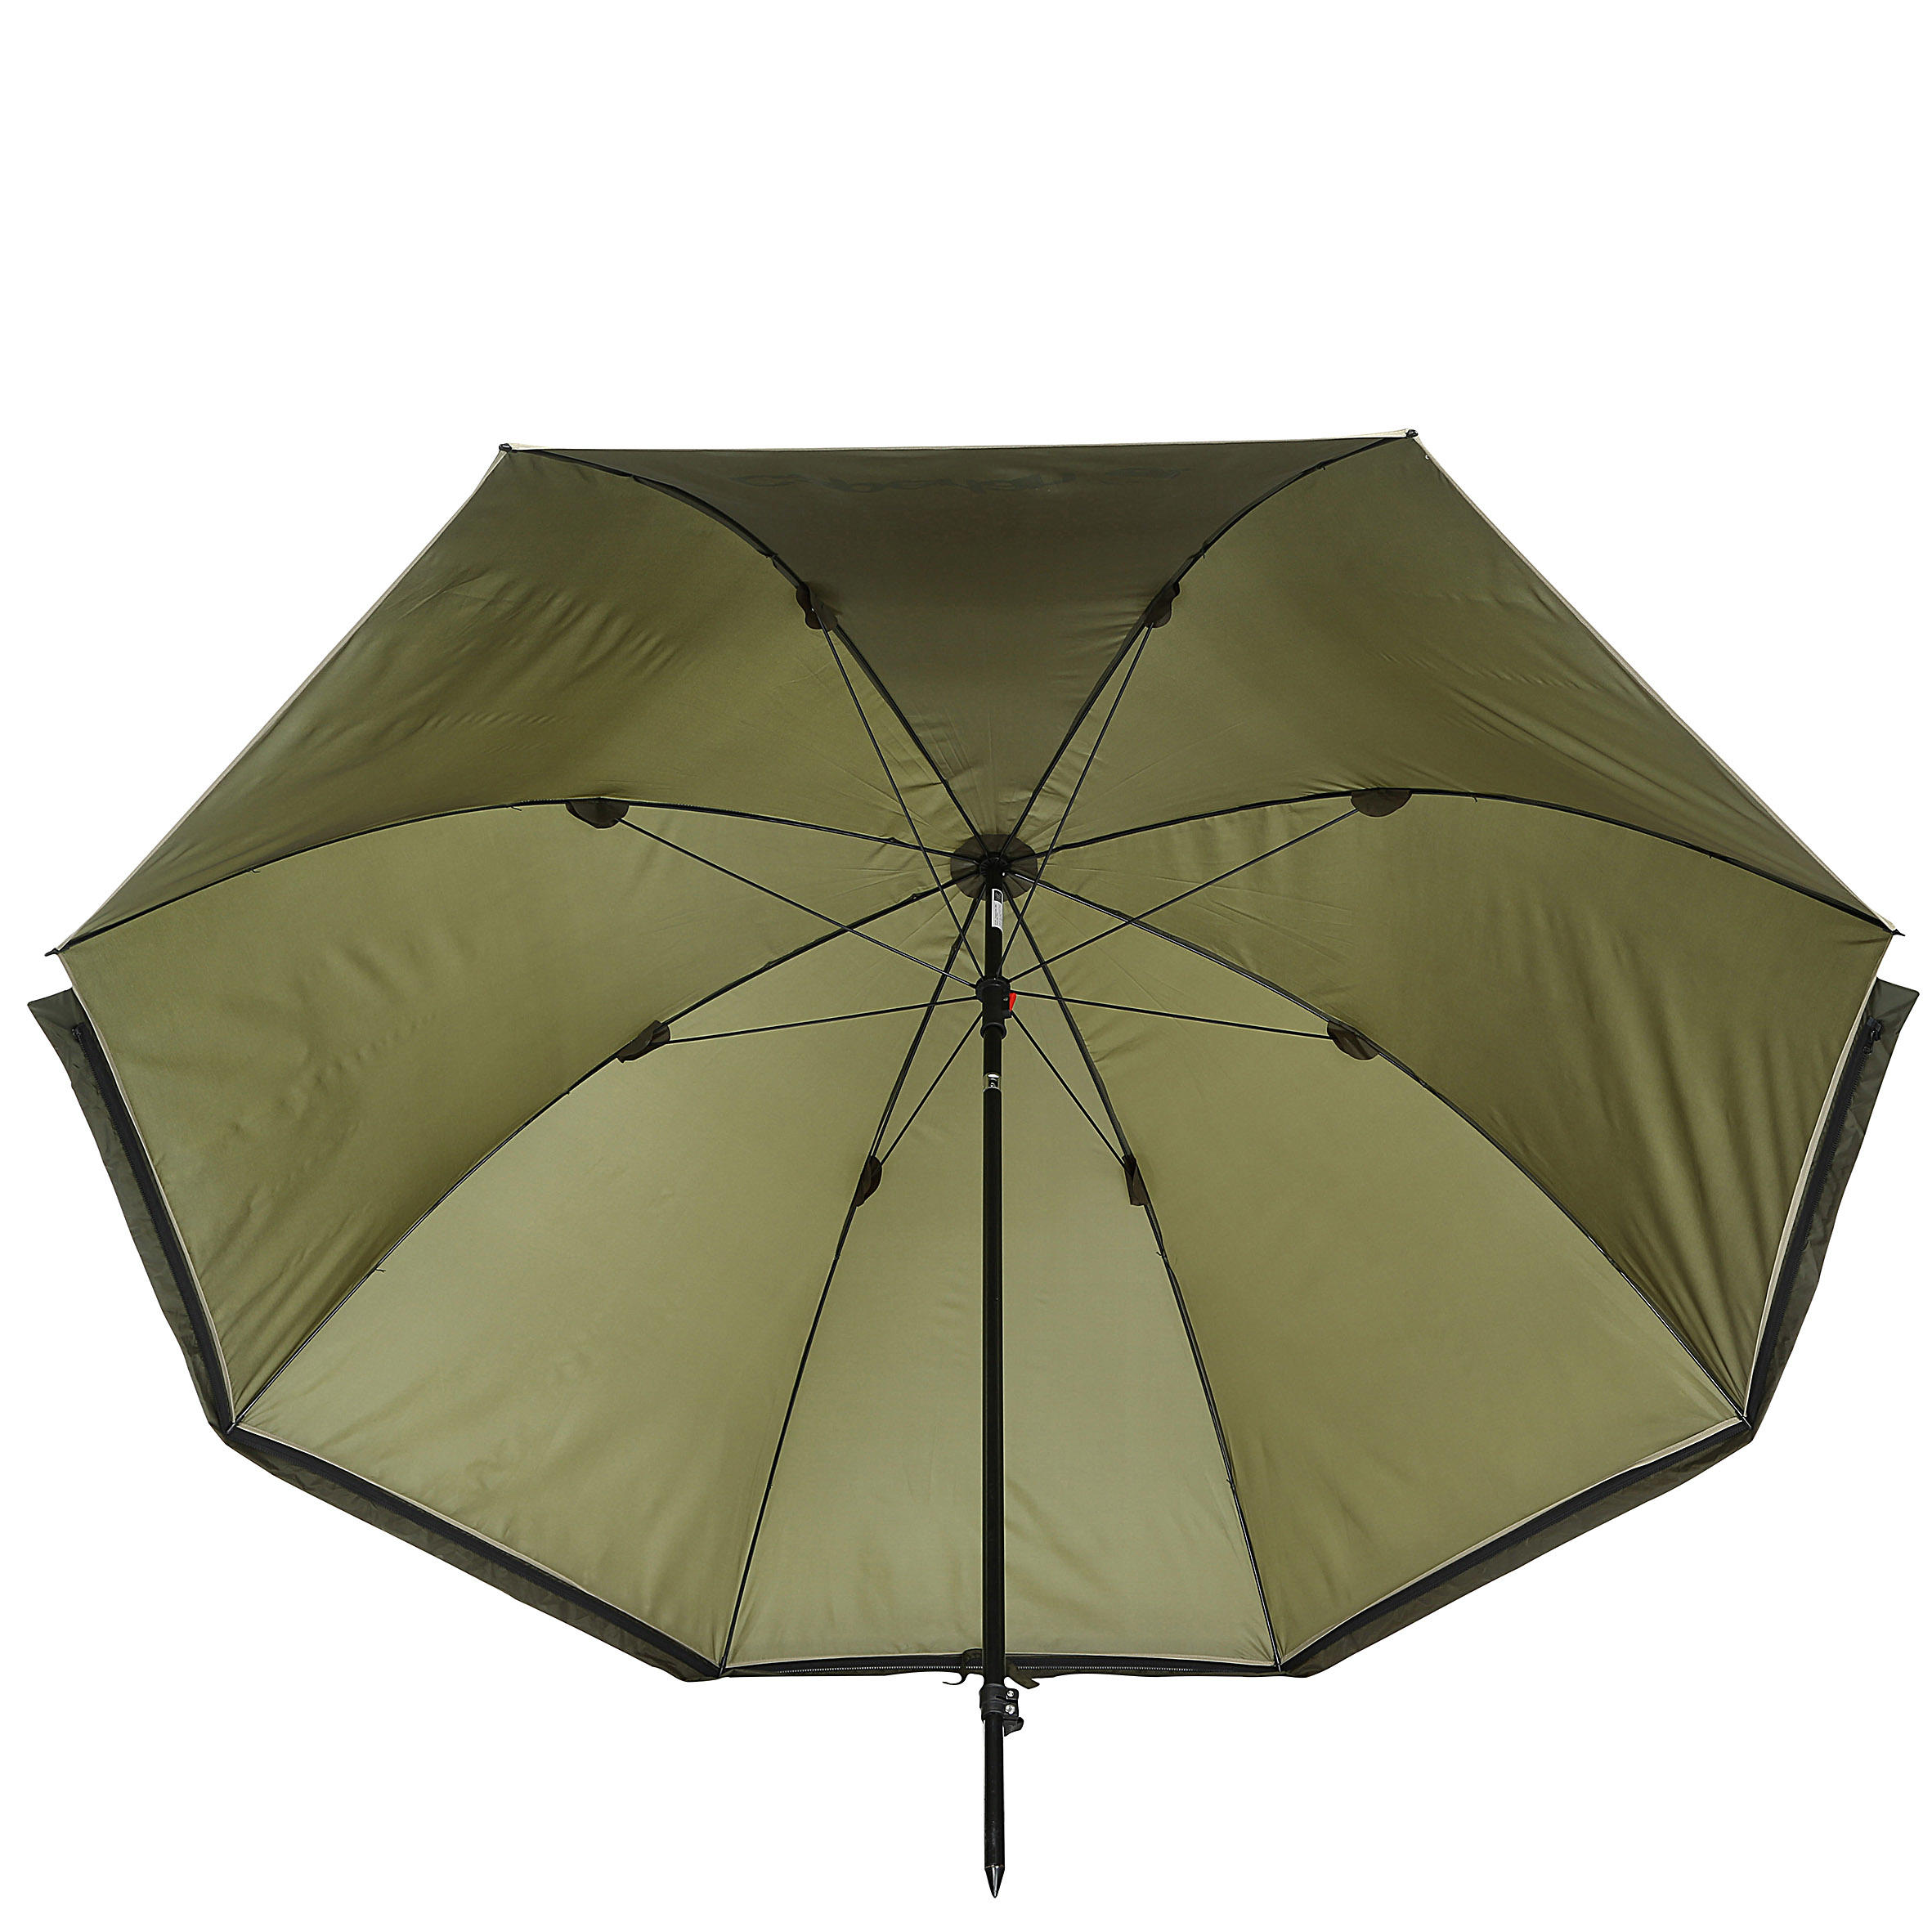 Fishing umbrella Size XL - CAPERLAN